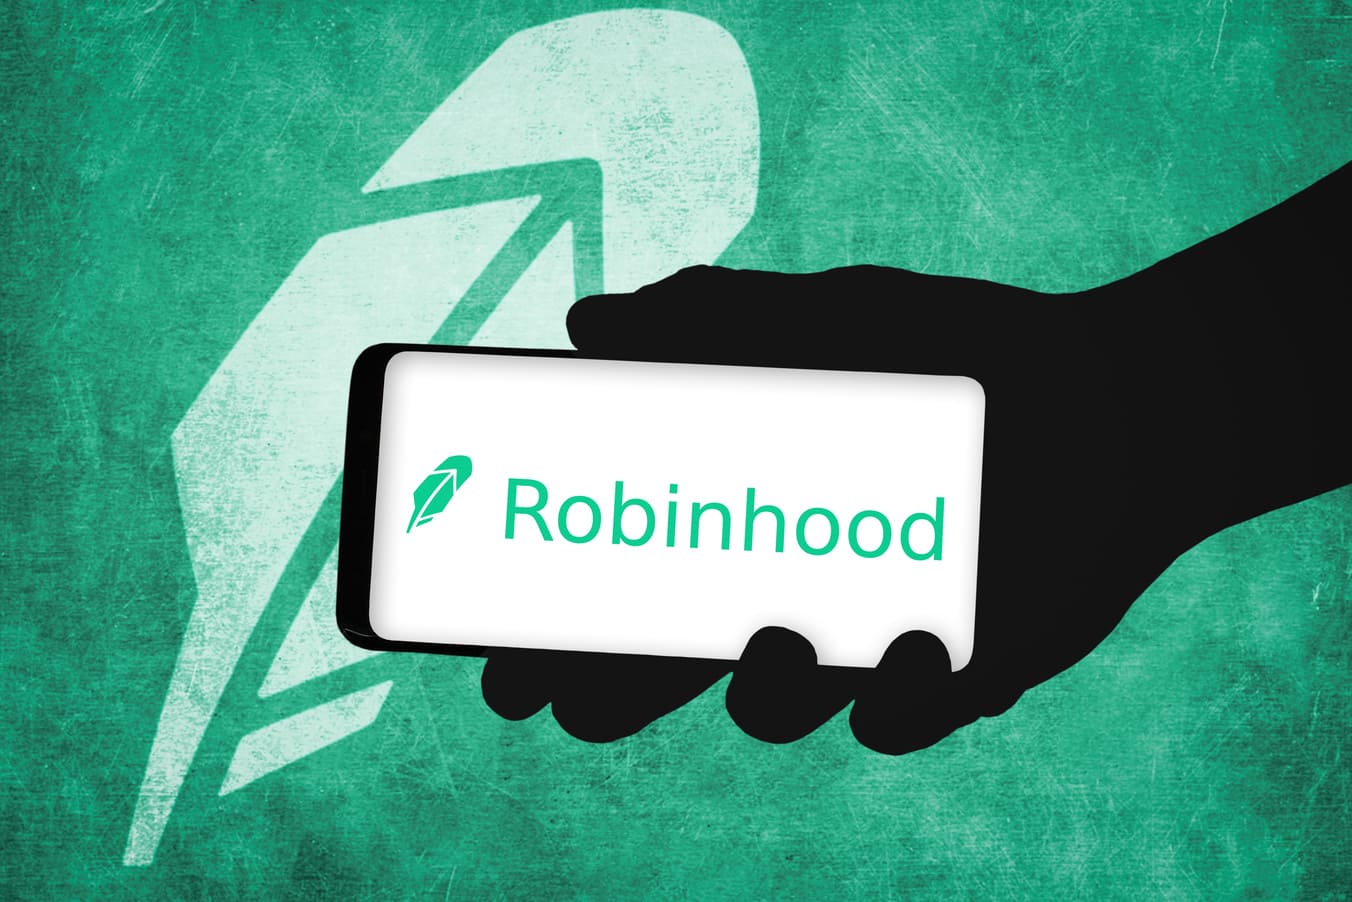 Robinhood Signs Agreement to Acquire Ziglu